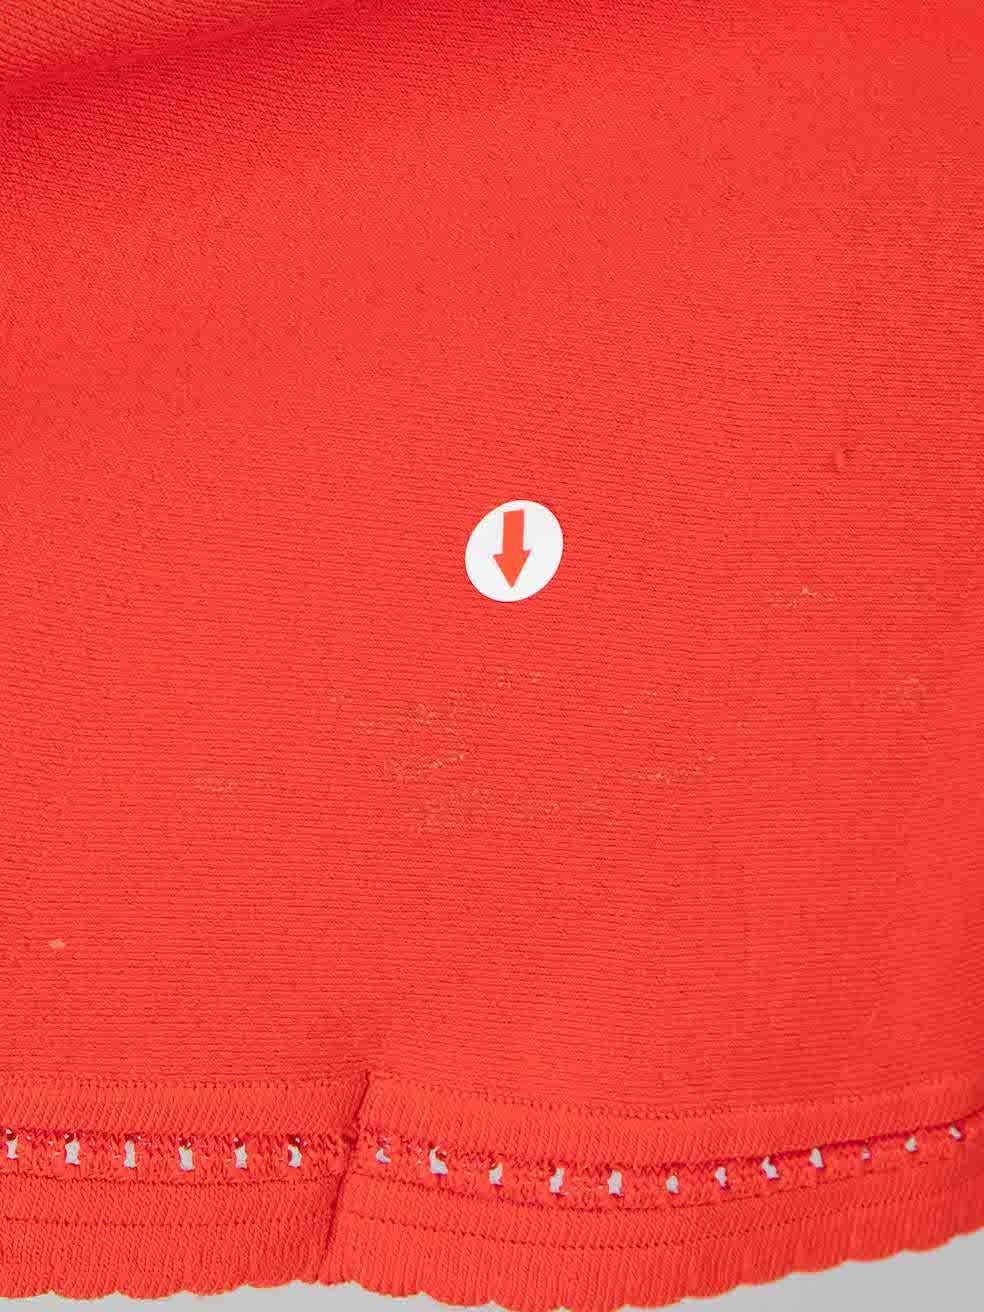 Diane Von Furstenberg Red Knit Mini Length Dress Size S For Sale 1